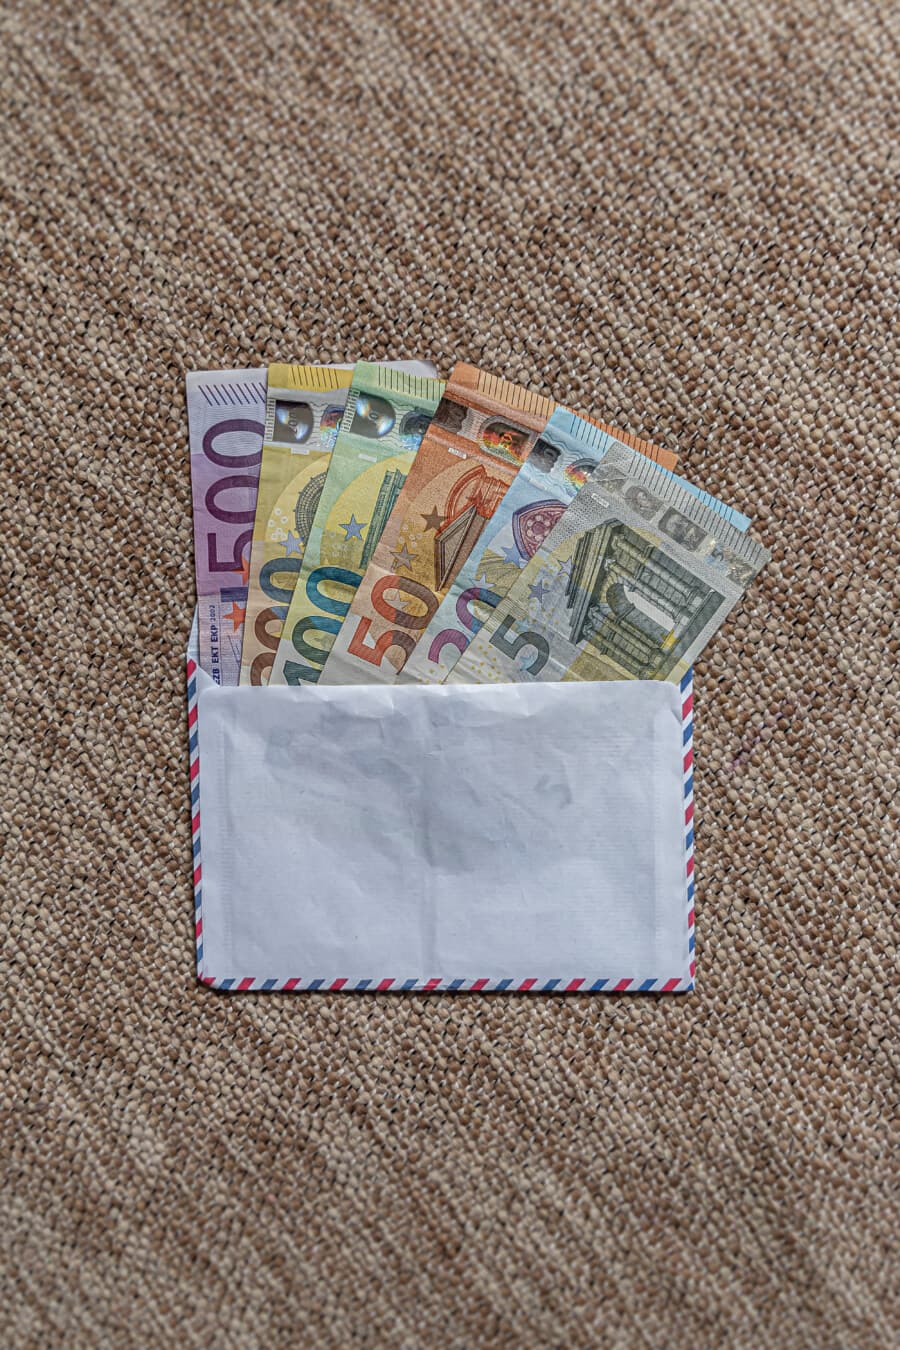 White envelope with cash savings in it illustrating money for shopping